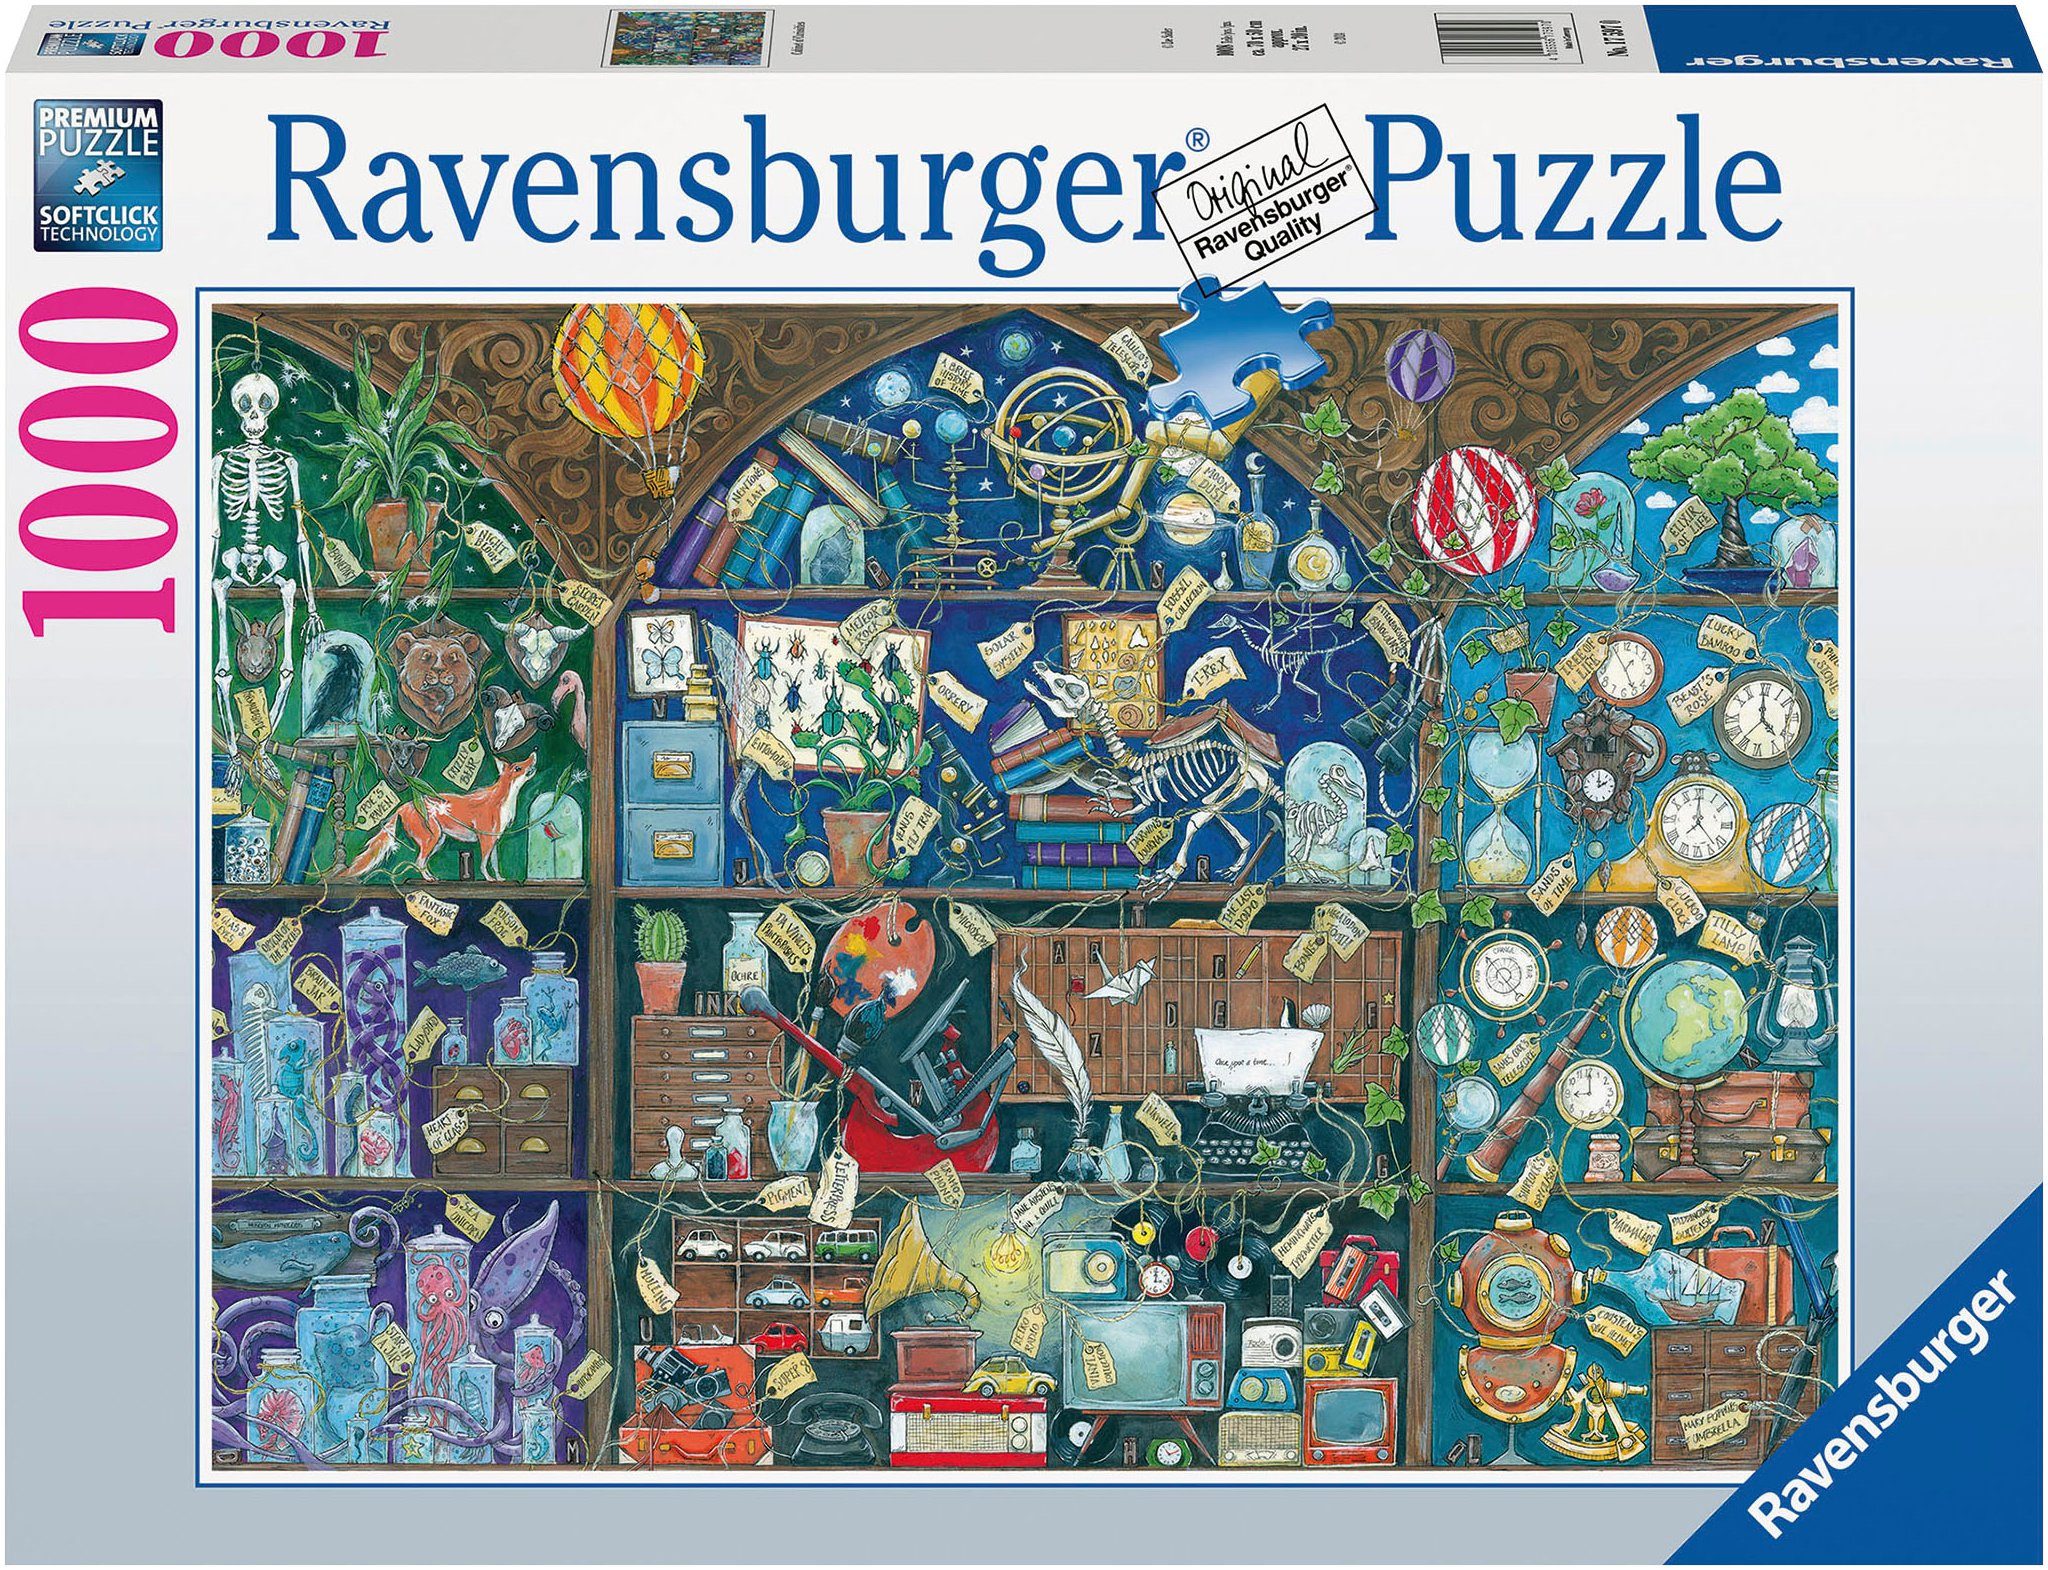 Ravensburger Puzzle Cabinet of Curiosities, 1000 Puzzleteile, Made in Germany, FSC® - schützt Wald - weltweit